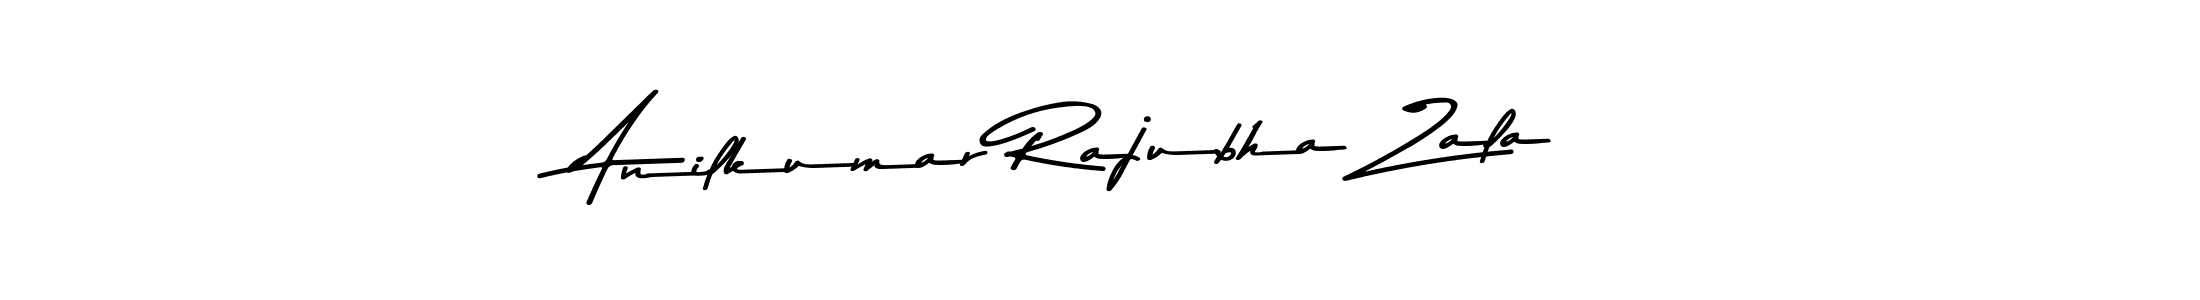 Anilkumar Rajubha Zala stylish signature style. Best Handwritten Sign (Asem Kandis PERSONAL USE) for my name. Handwritten Signature Collection Ideas for my name Anilkumar Rajubha Zala. Anilkumar Rajubha Zala signature style 9 images and pictures png